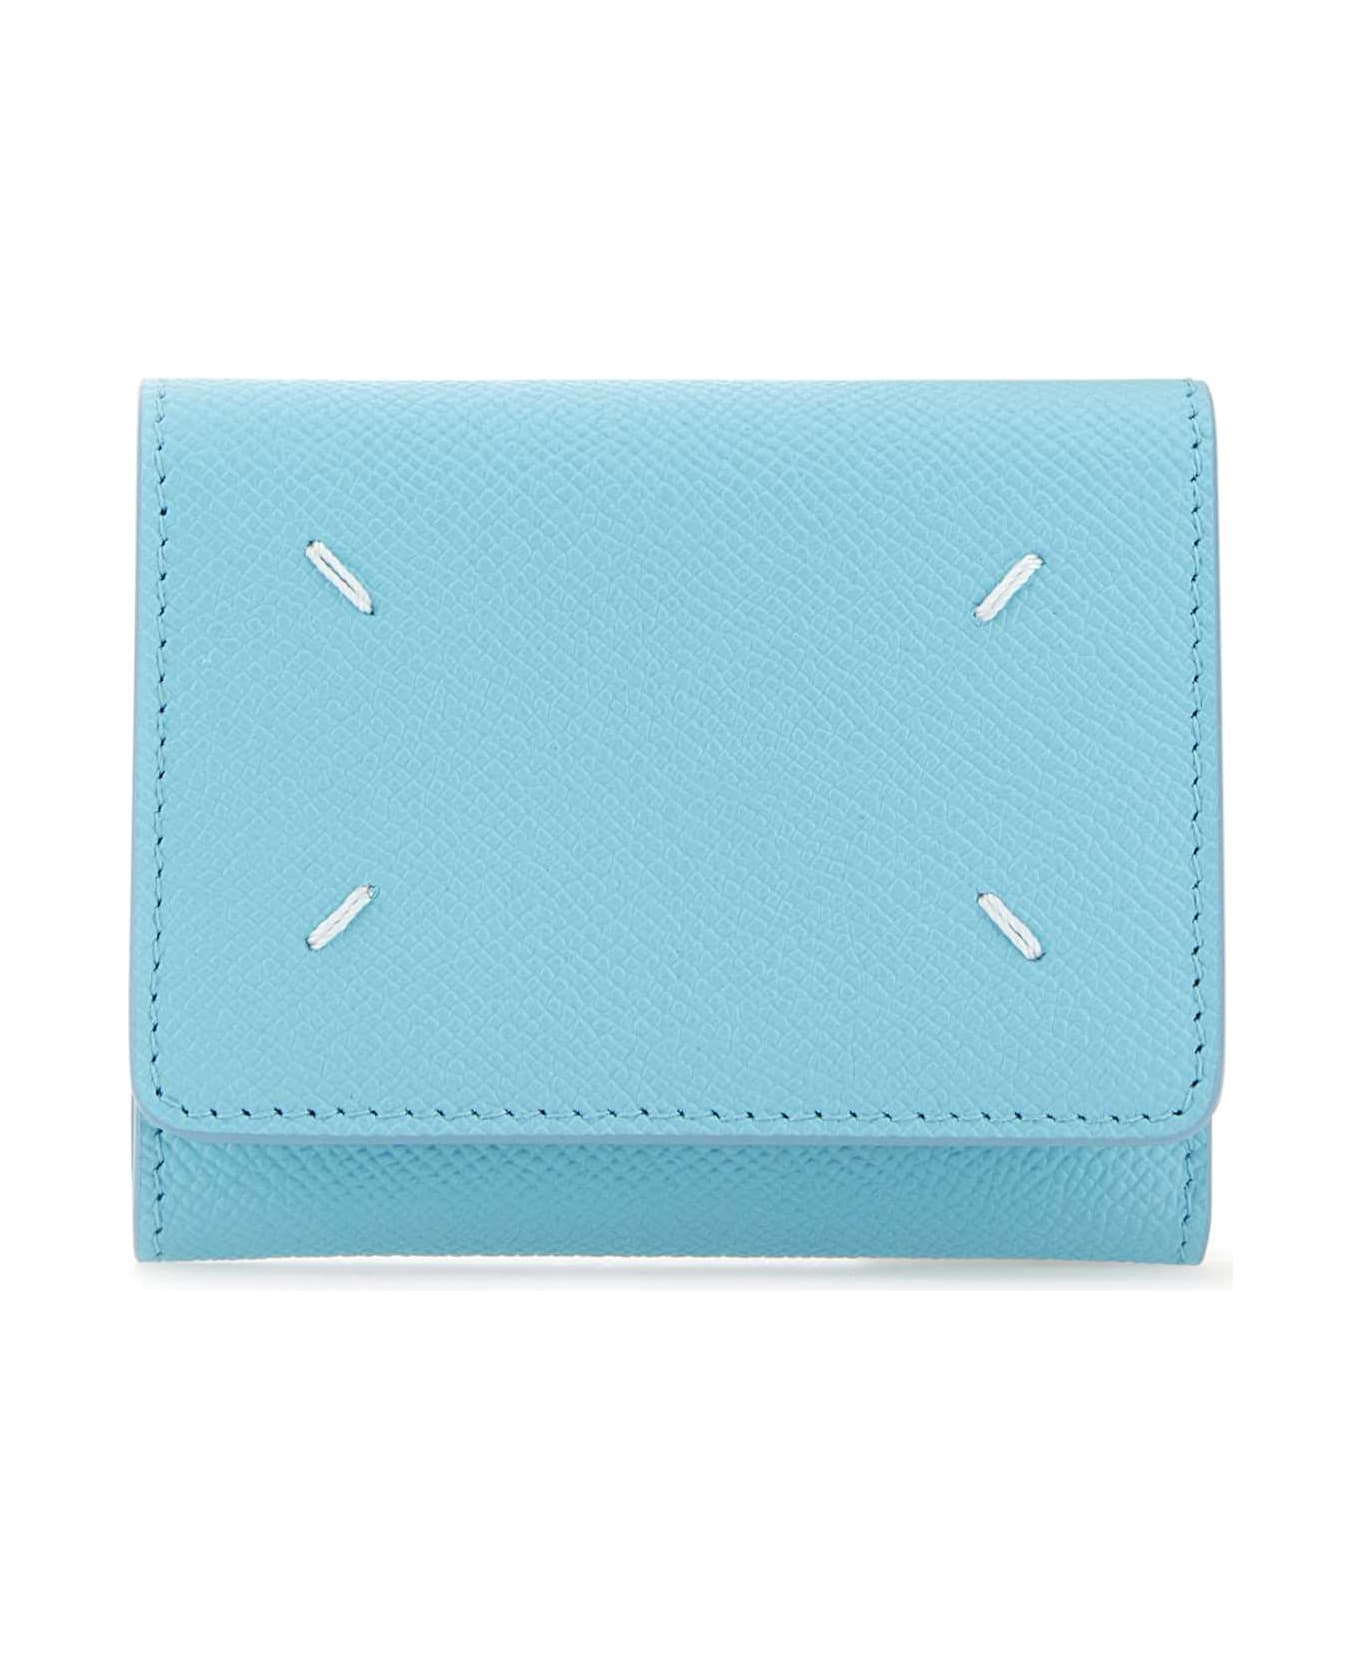 Maison Margiela Light-blue Leather Wallet - AQUA